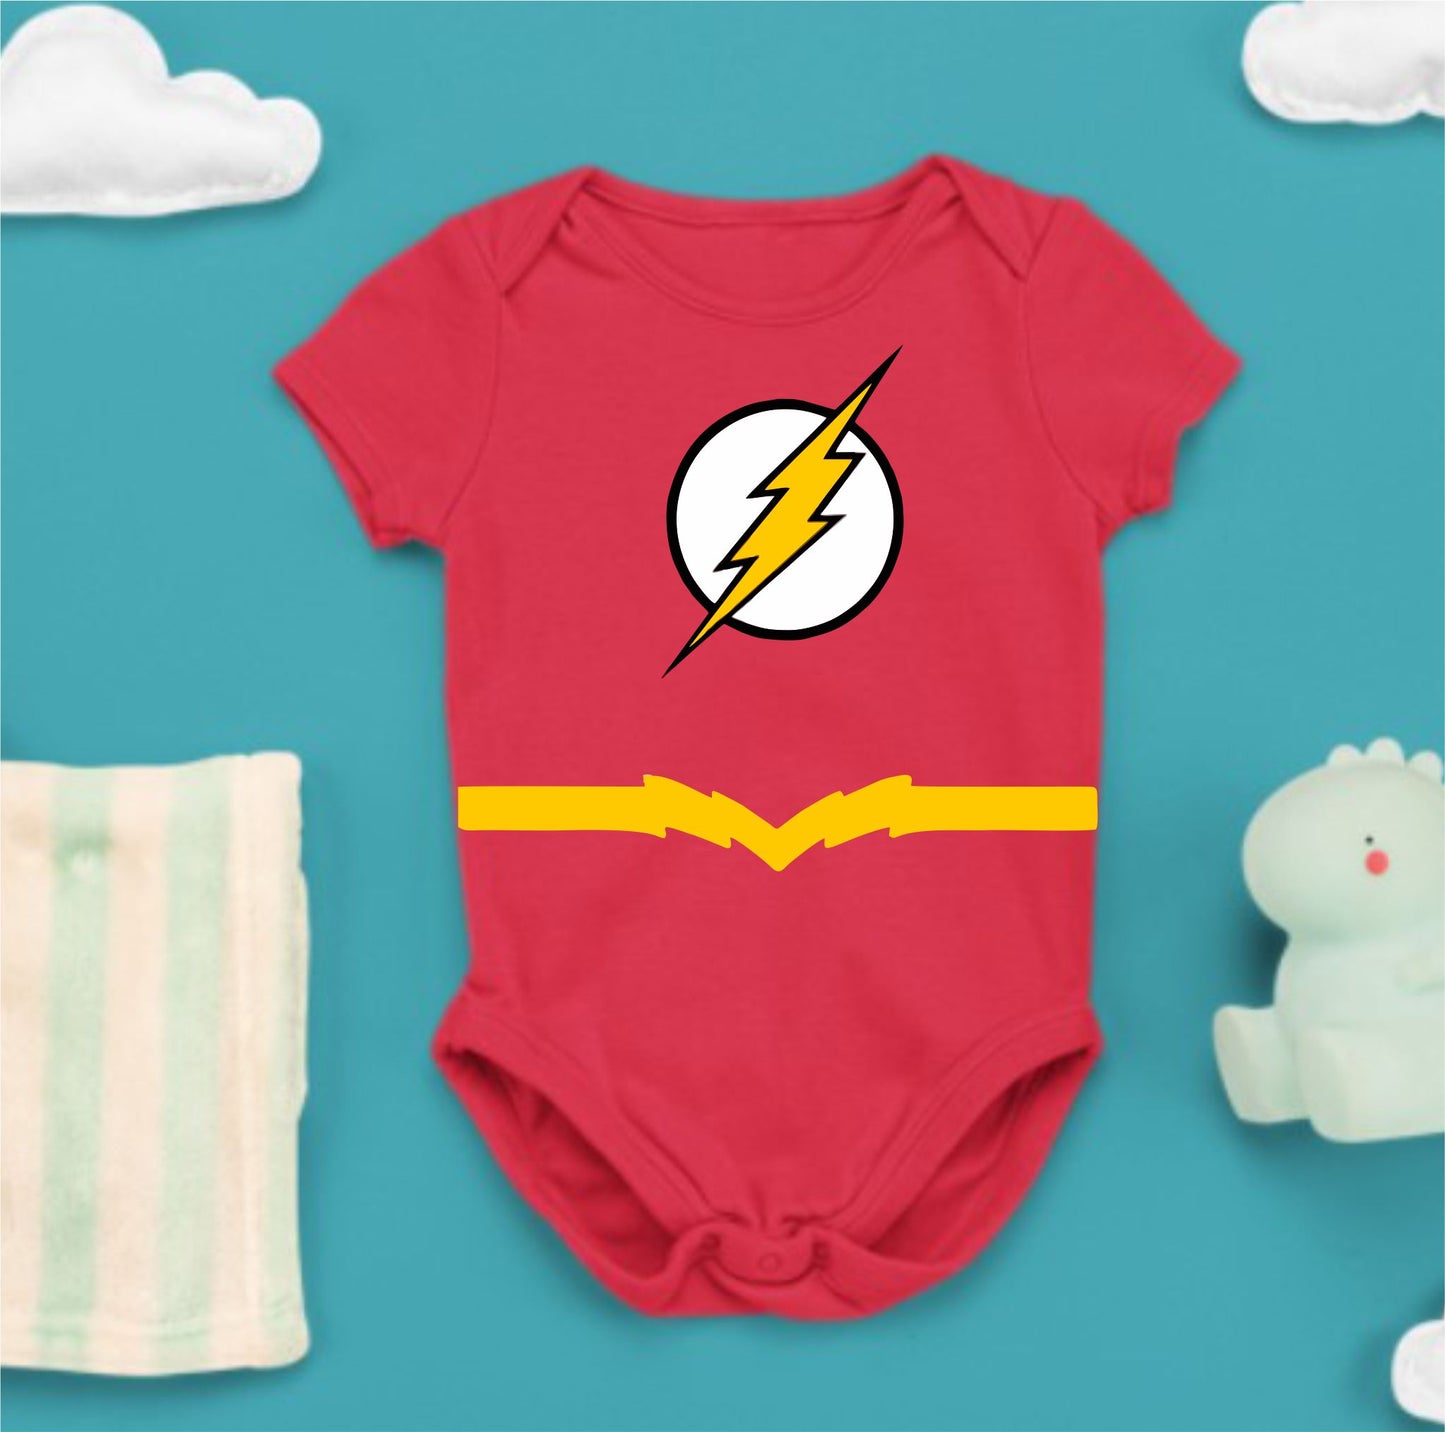 Baby Superhero Onesies - Flash 1